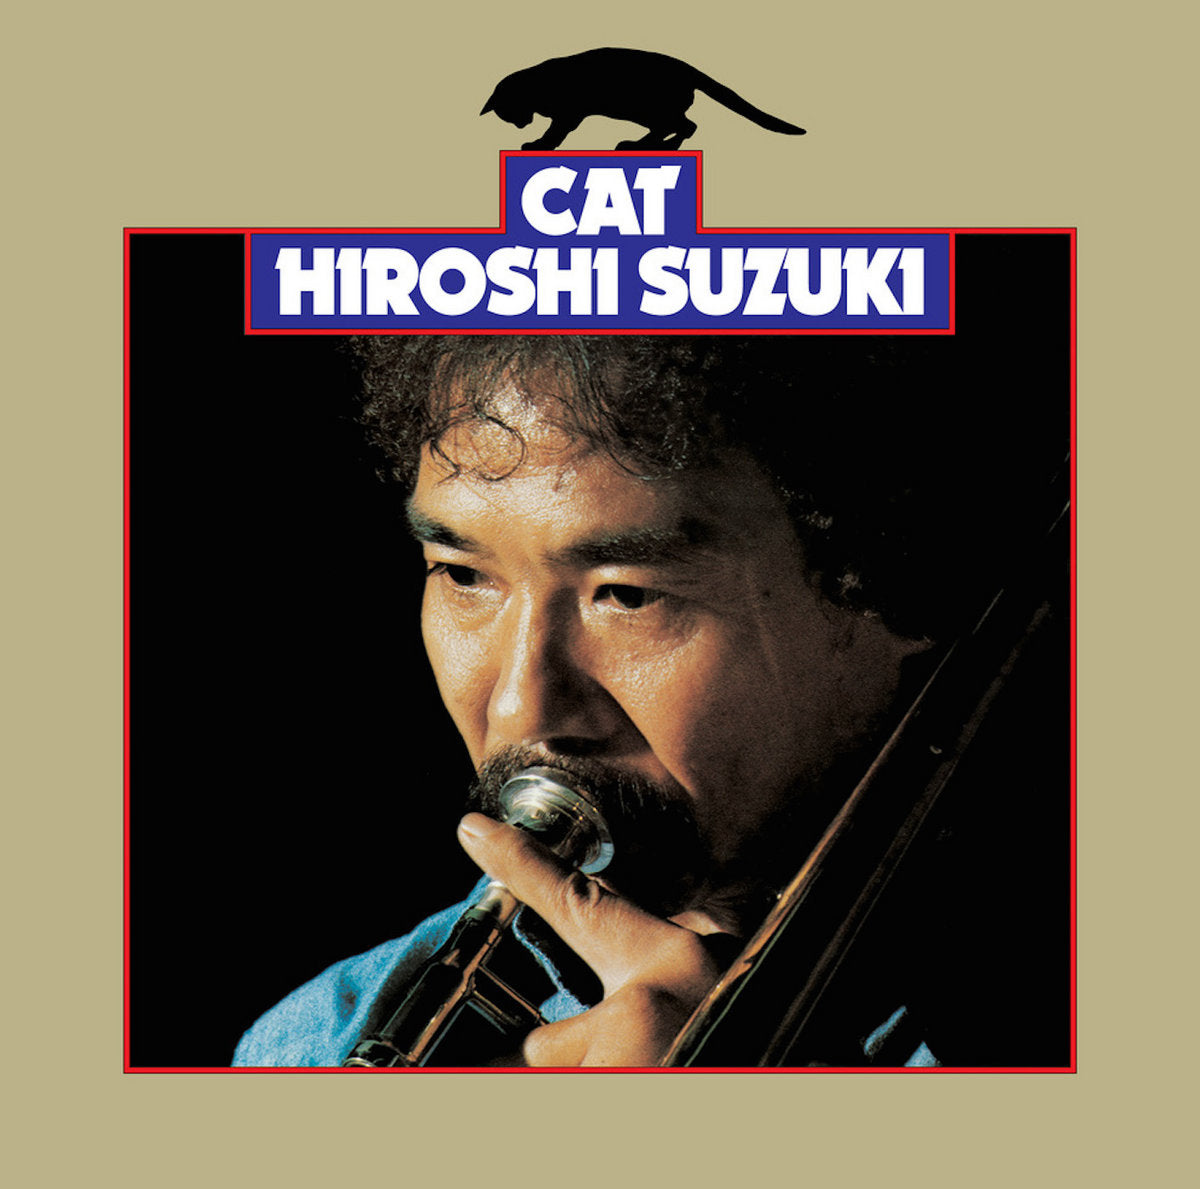 hiroshi suzuki cat vinyl record on the jungle floor